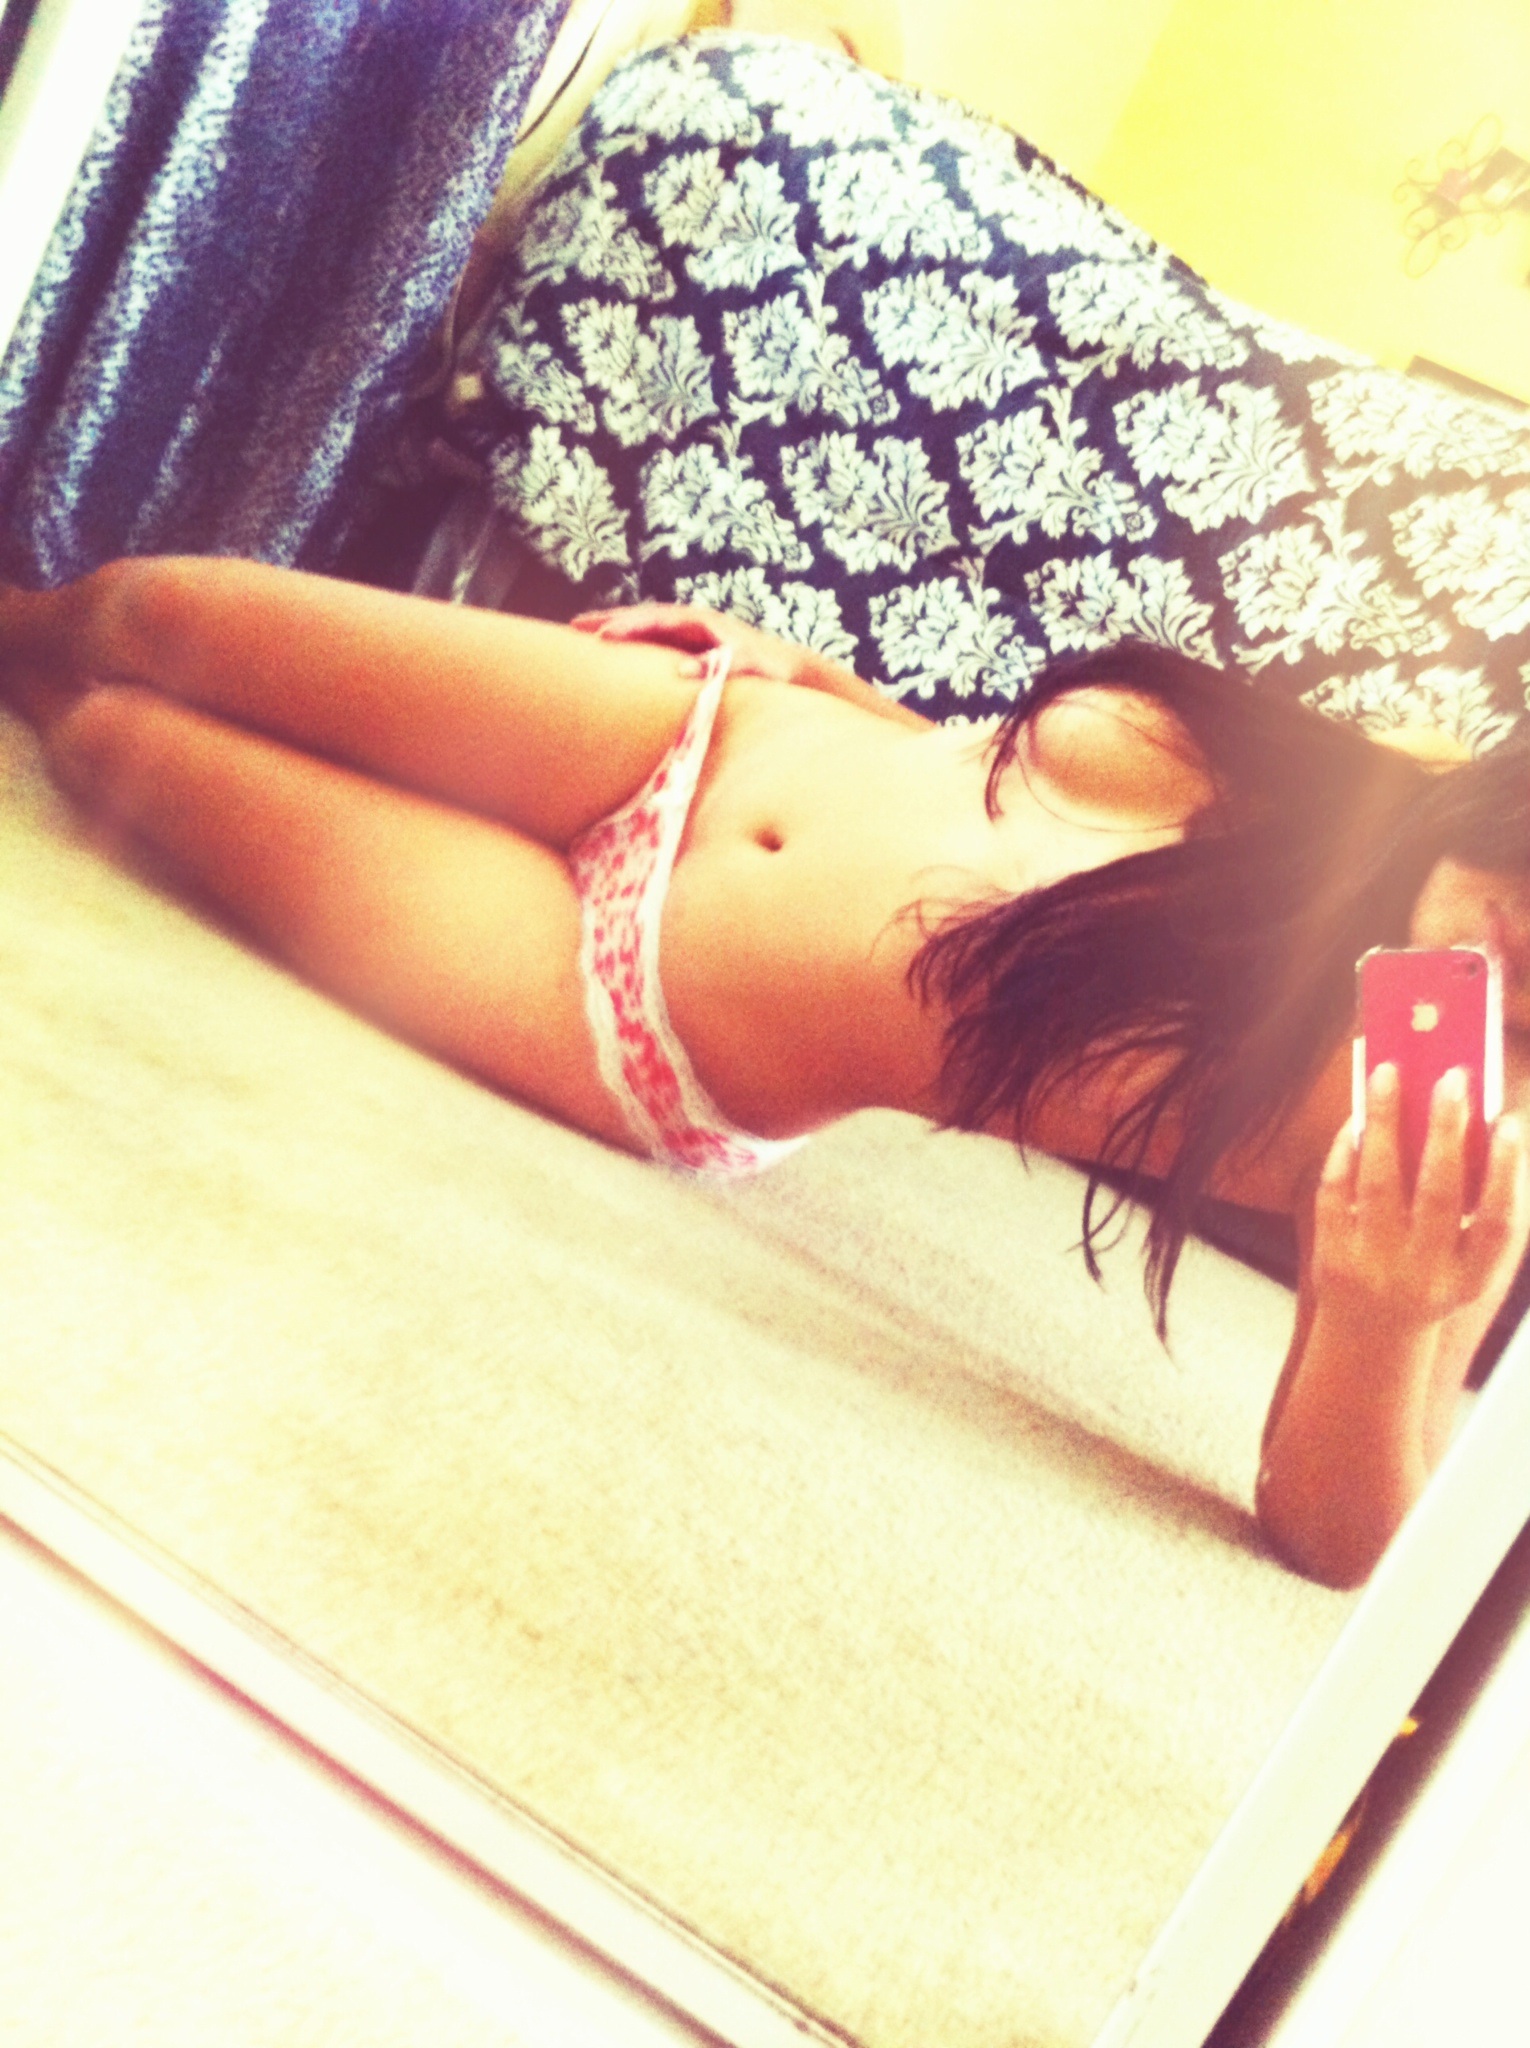 Busty amateur latina teen naked pics image